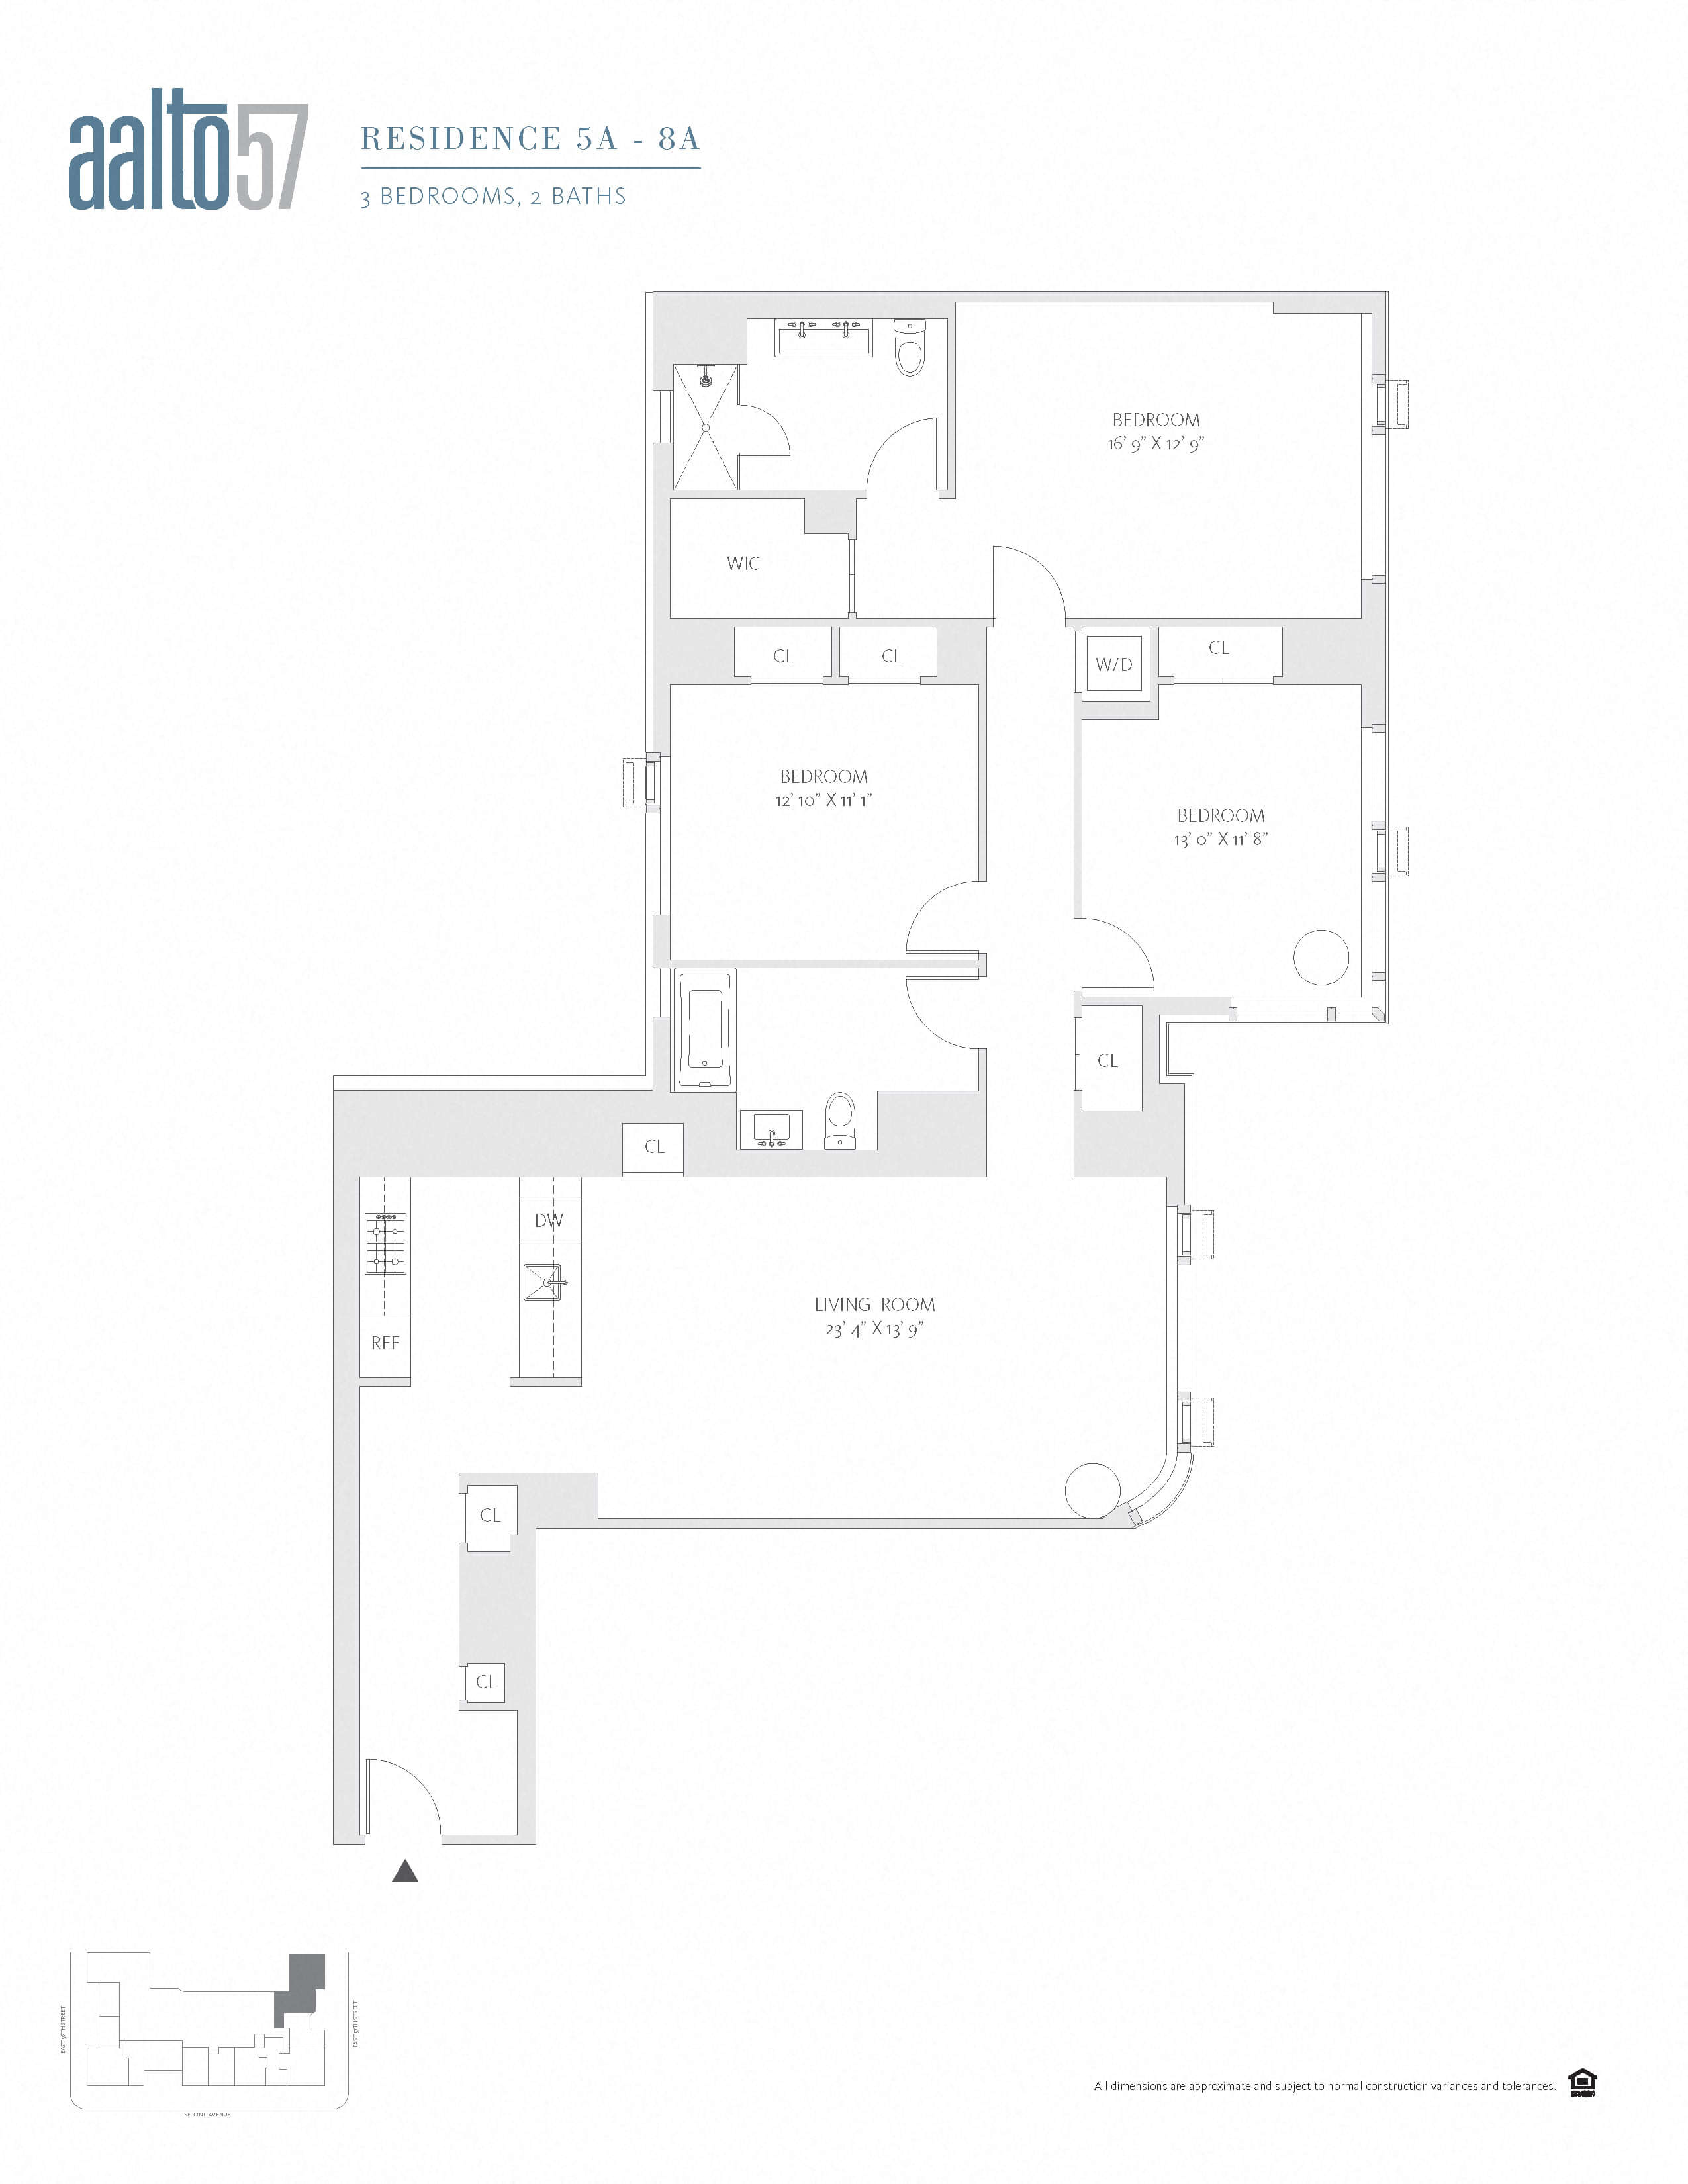 Apartment 08A floorplan